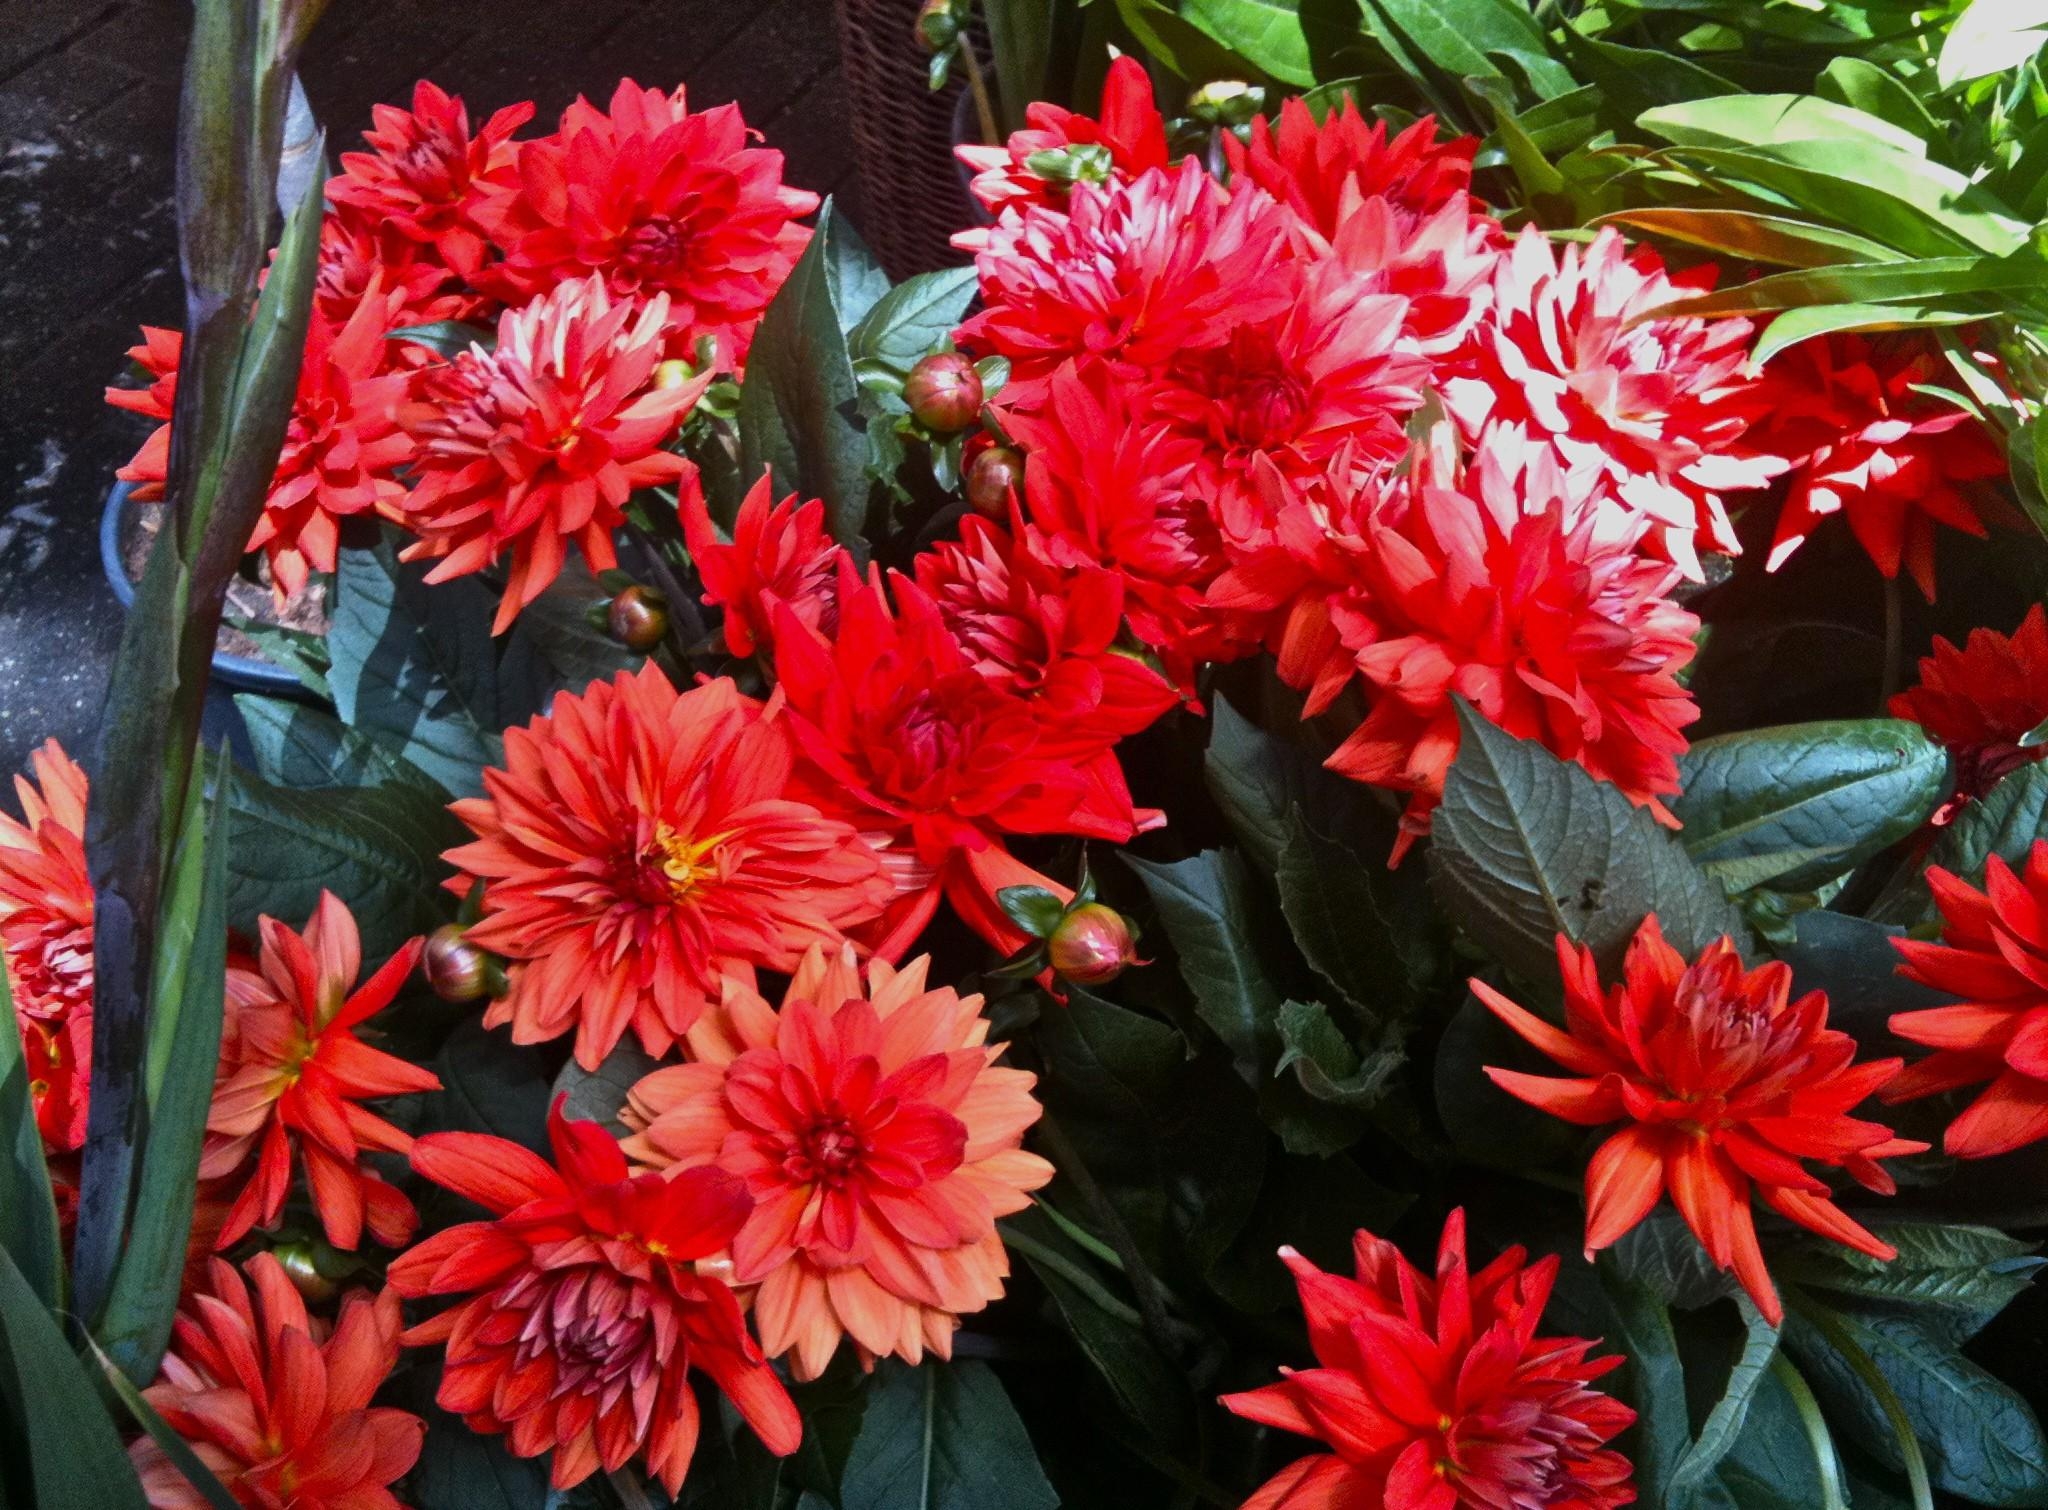 flowerbed, flowers, red, flower bed, dahlias